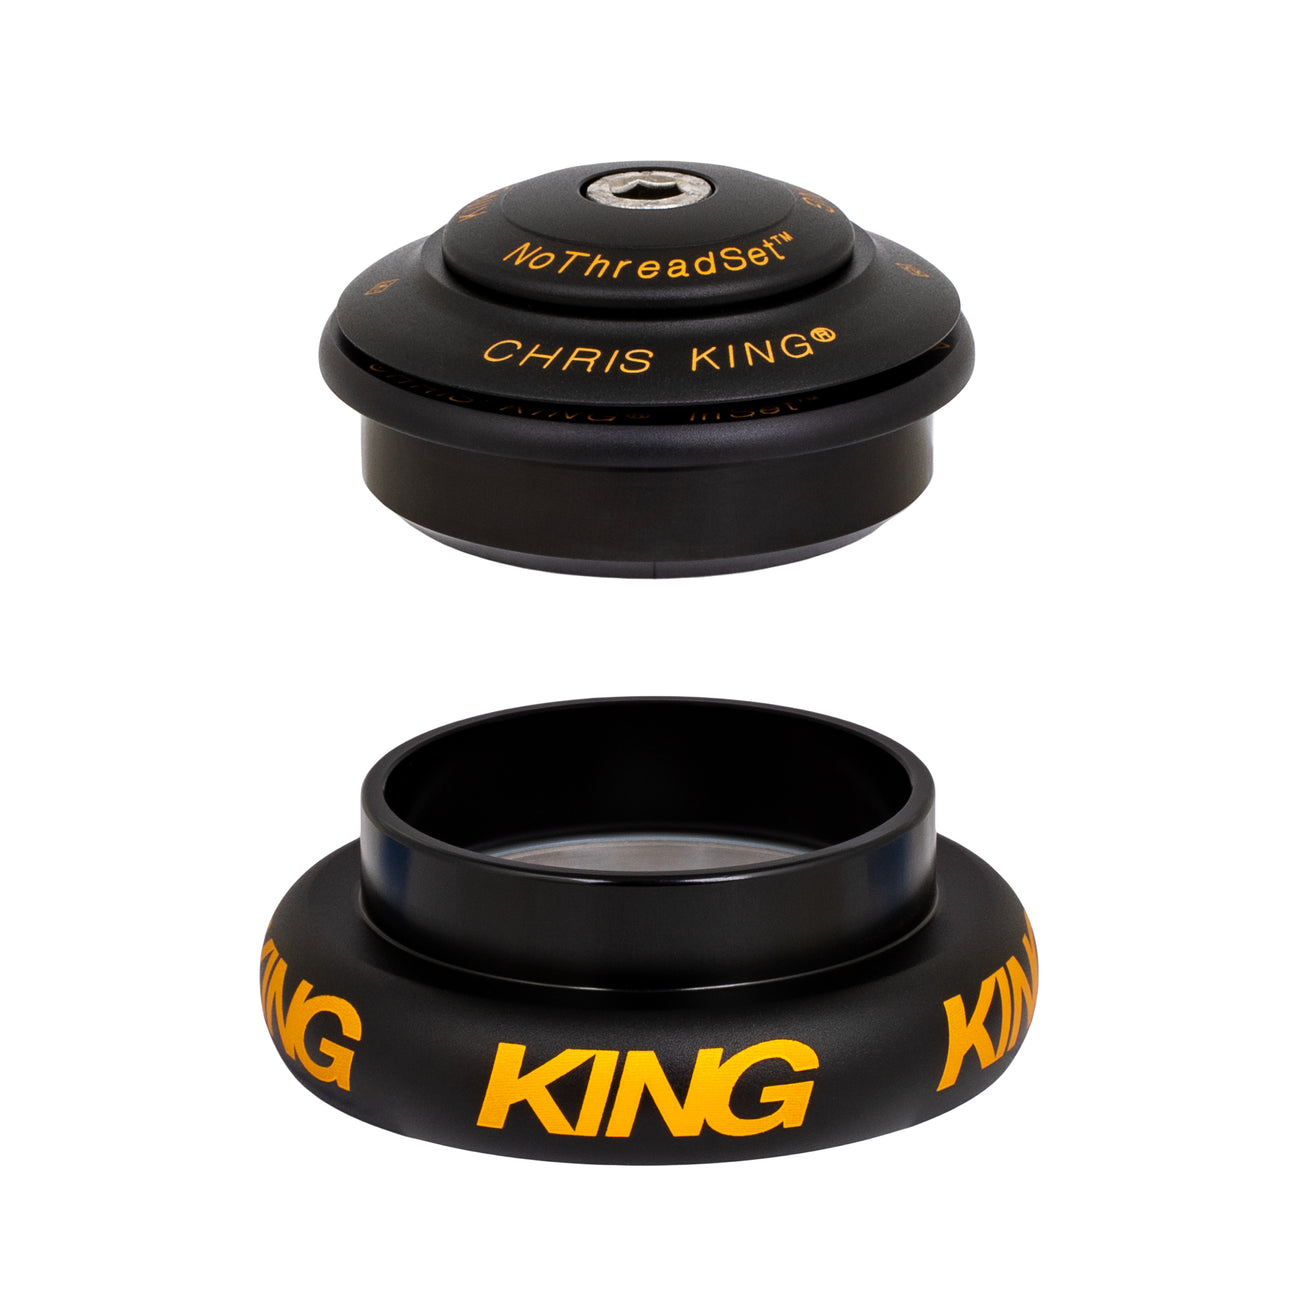 Chris King inset 7 headset in black/gold